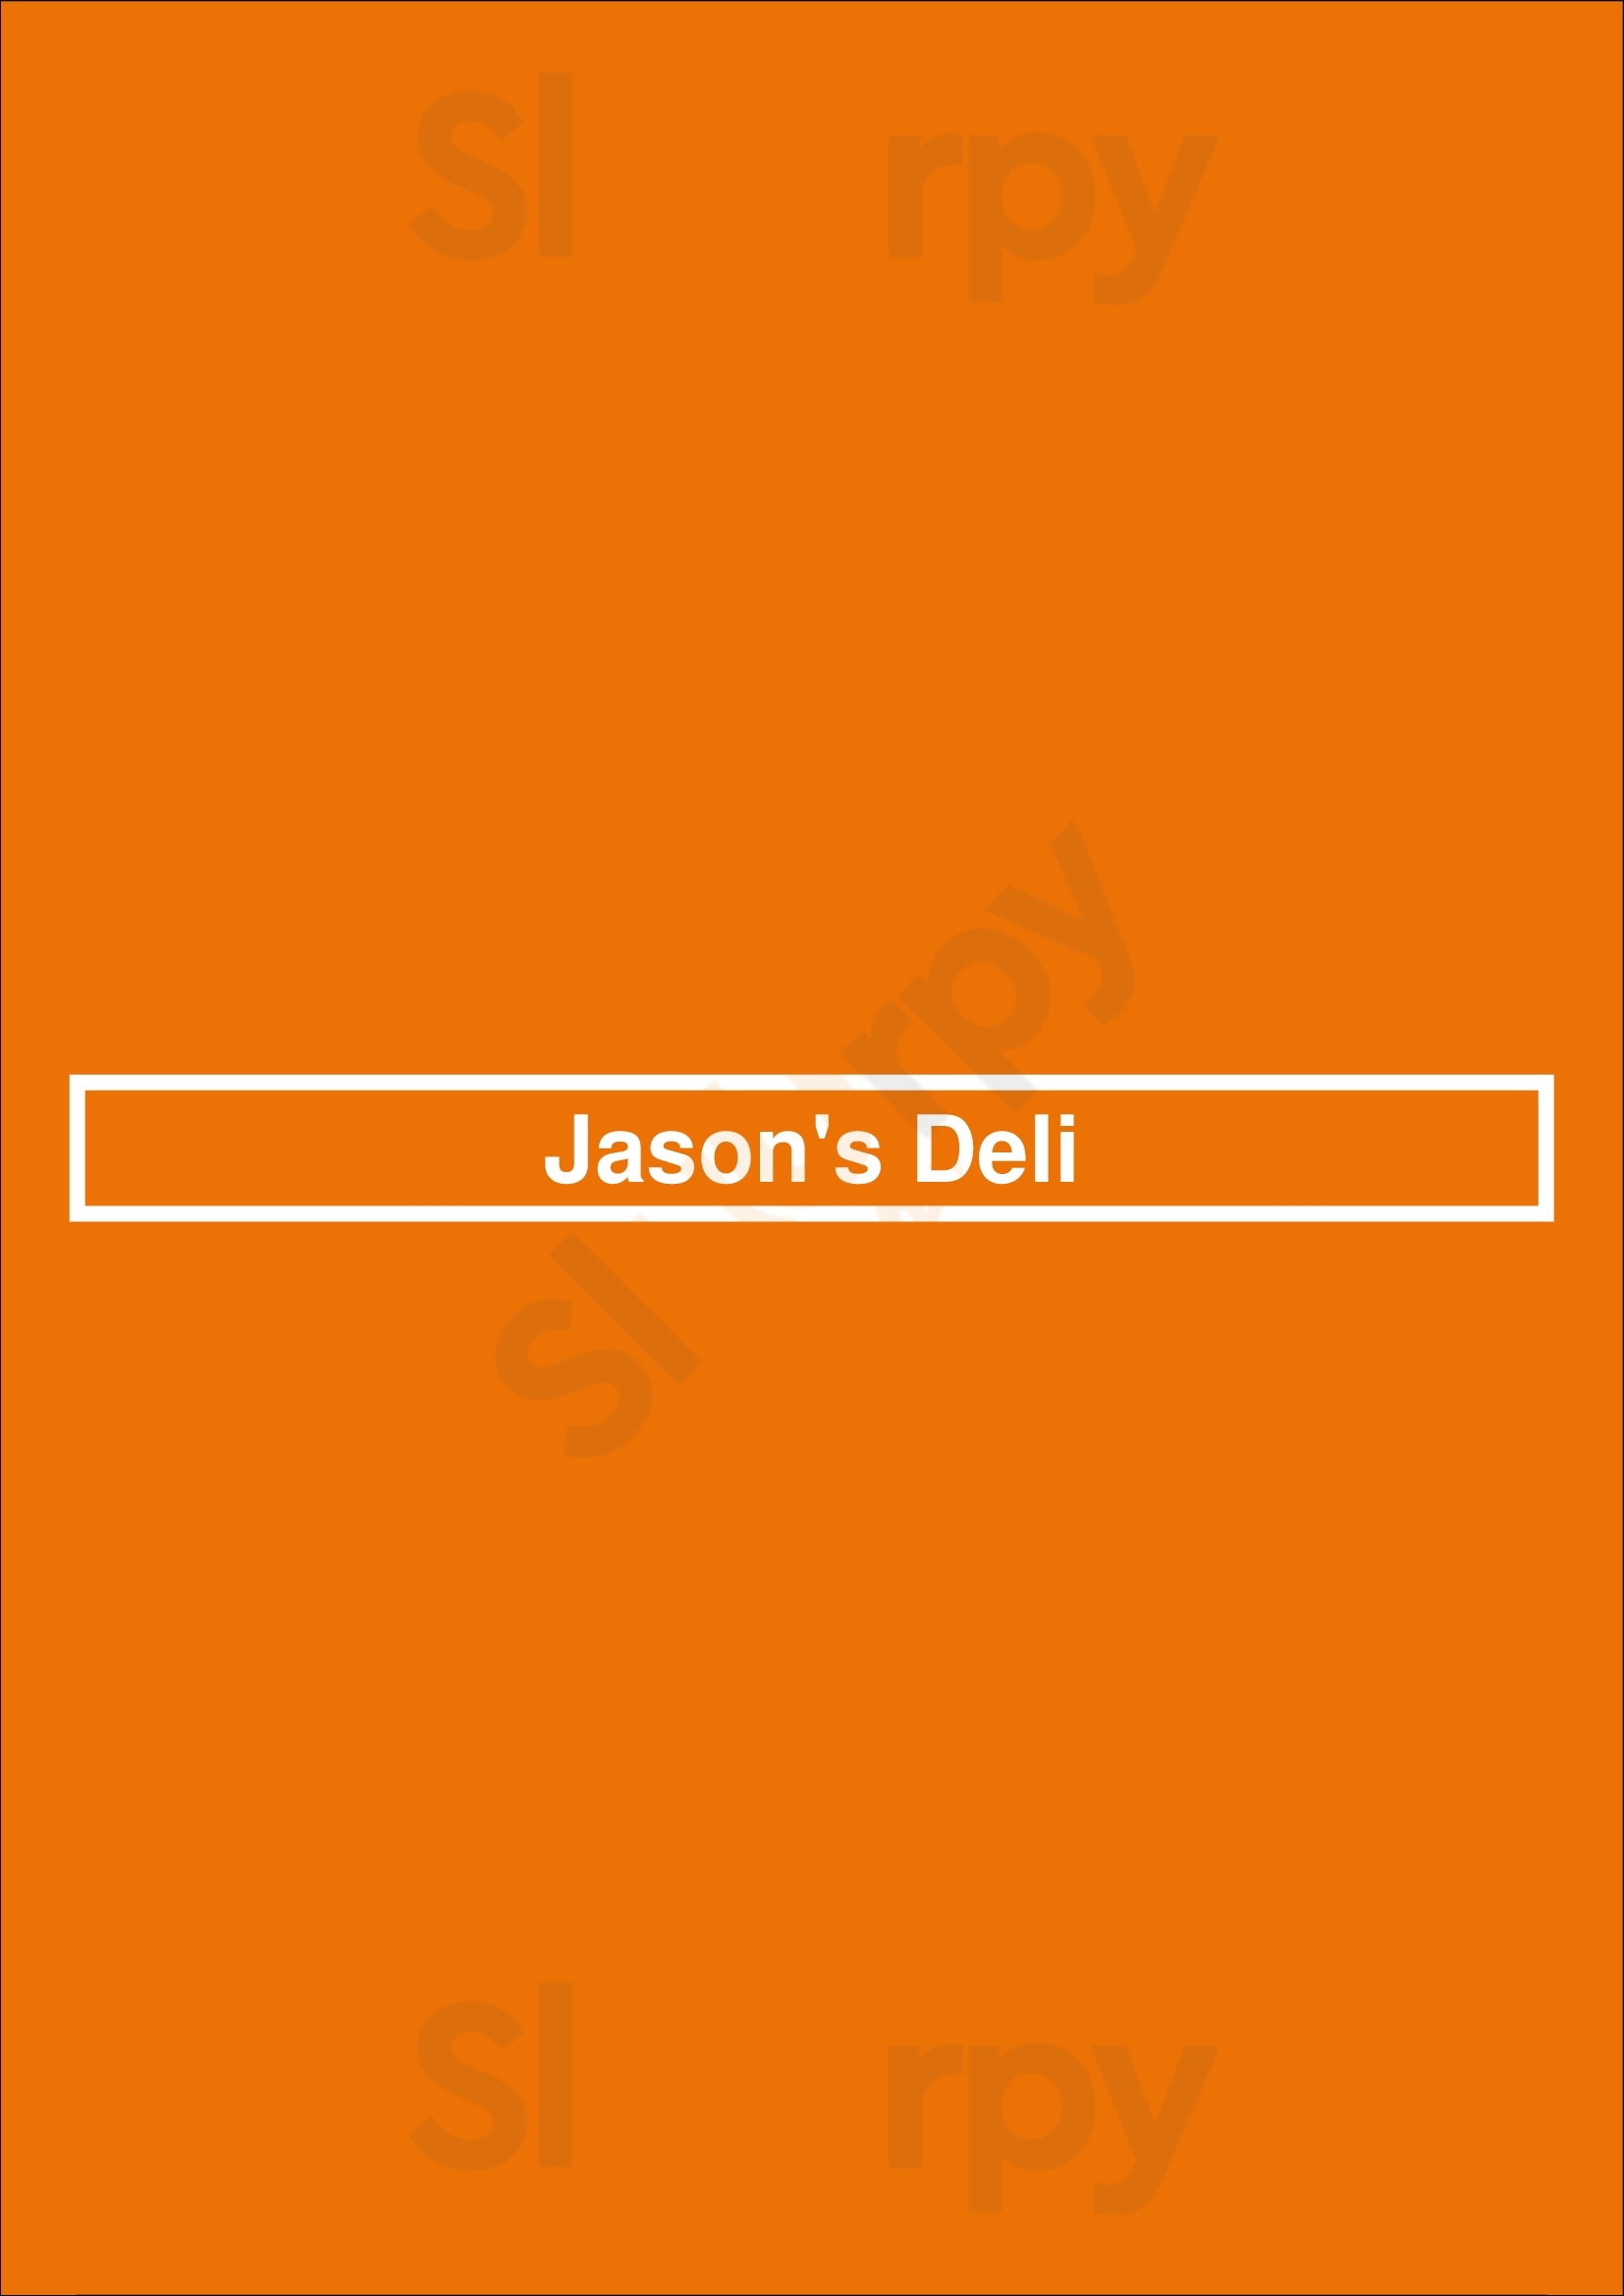 Jason's Deli Wichita Menu - 1